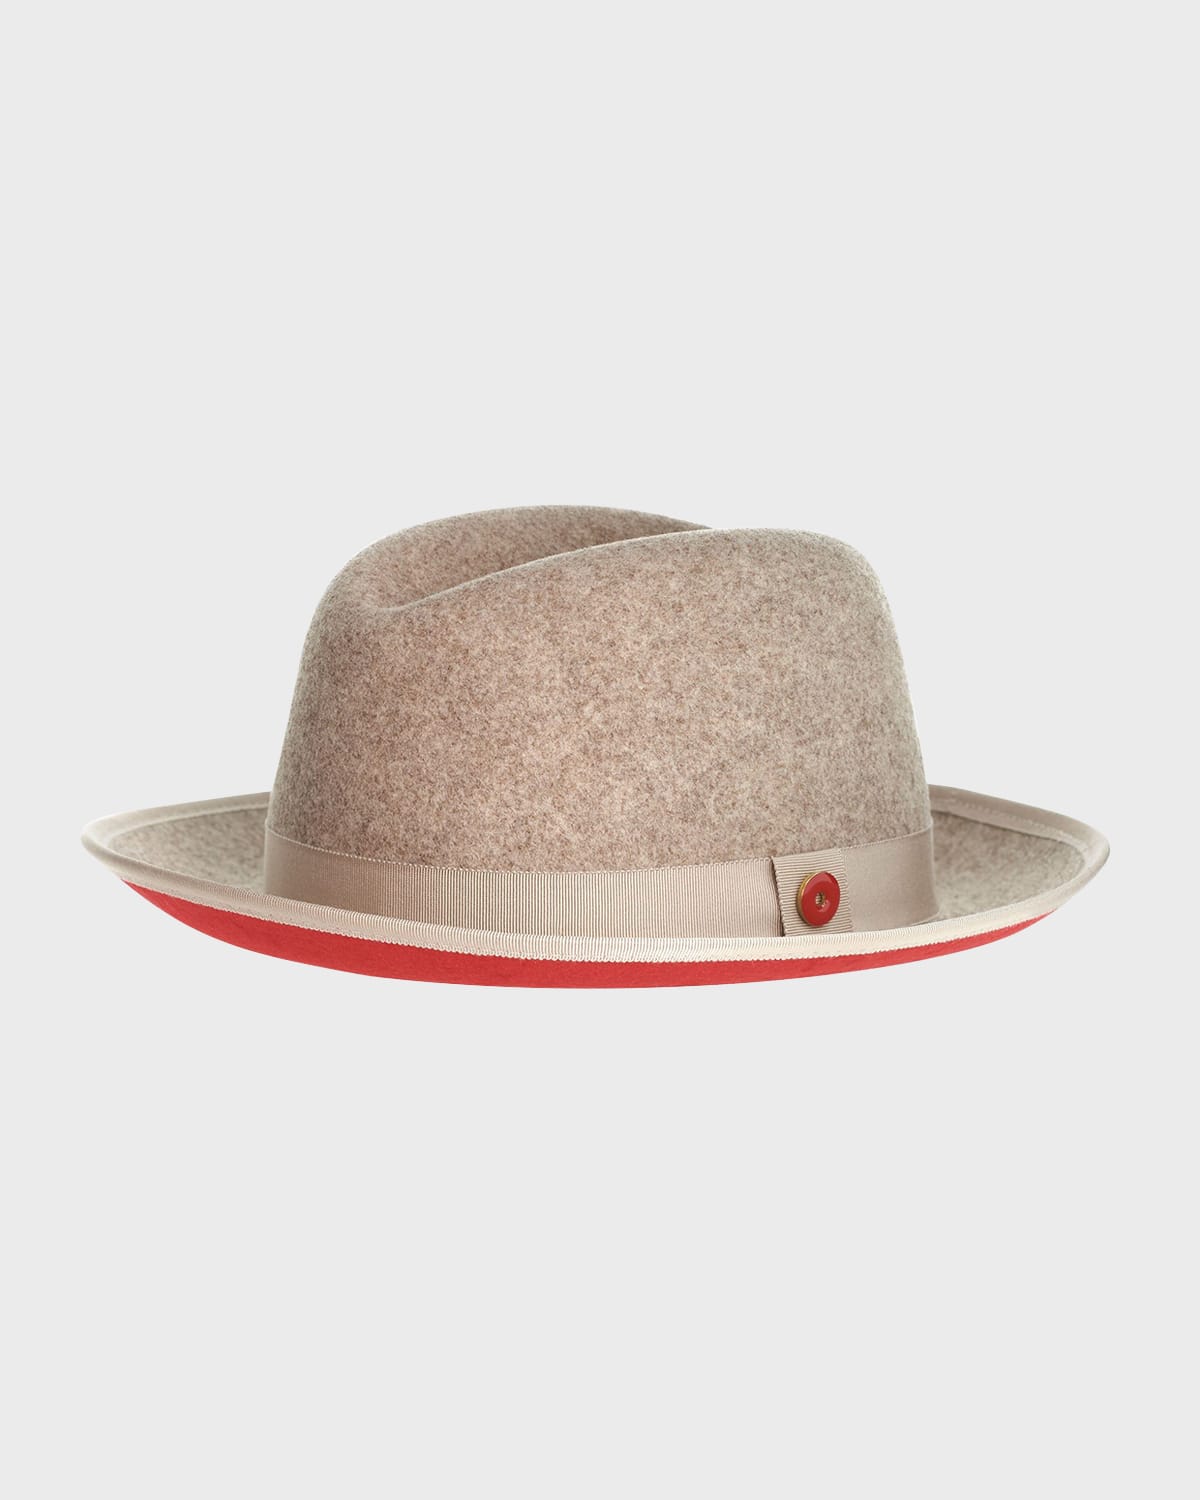 Keith James Men's King Fedora Hat